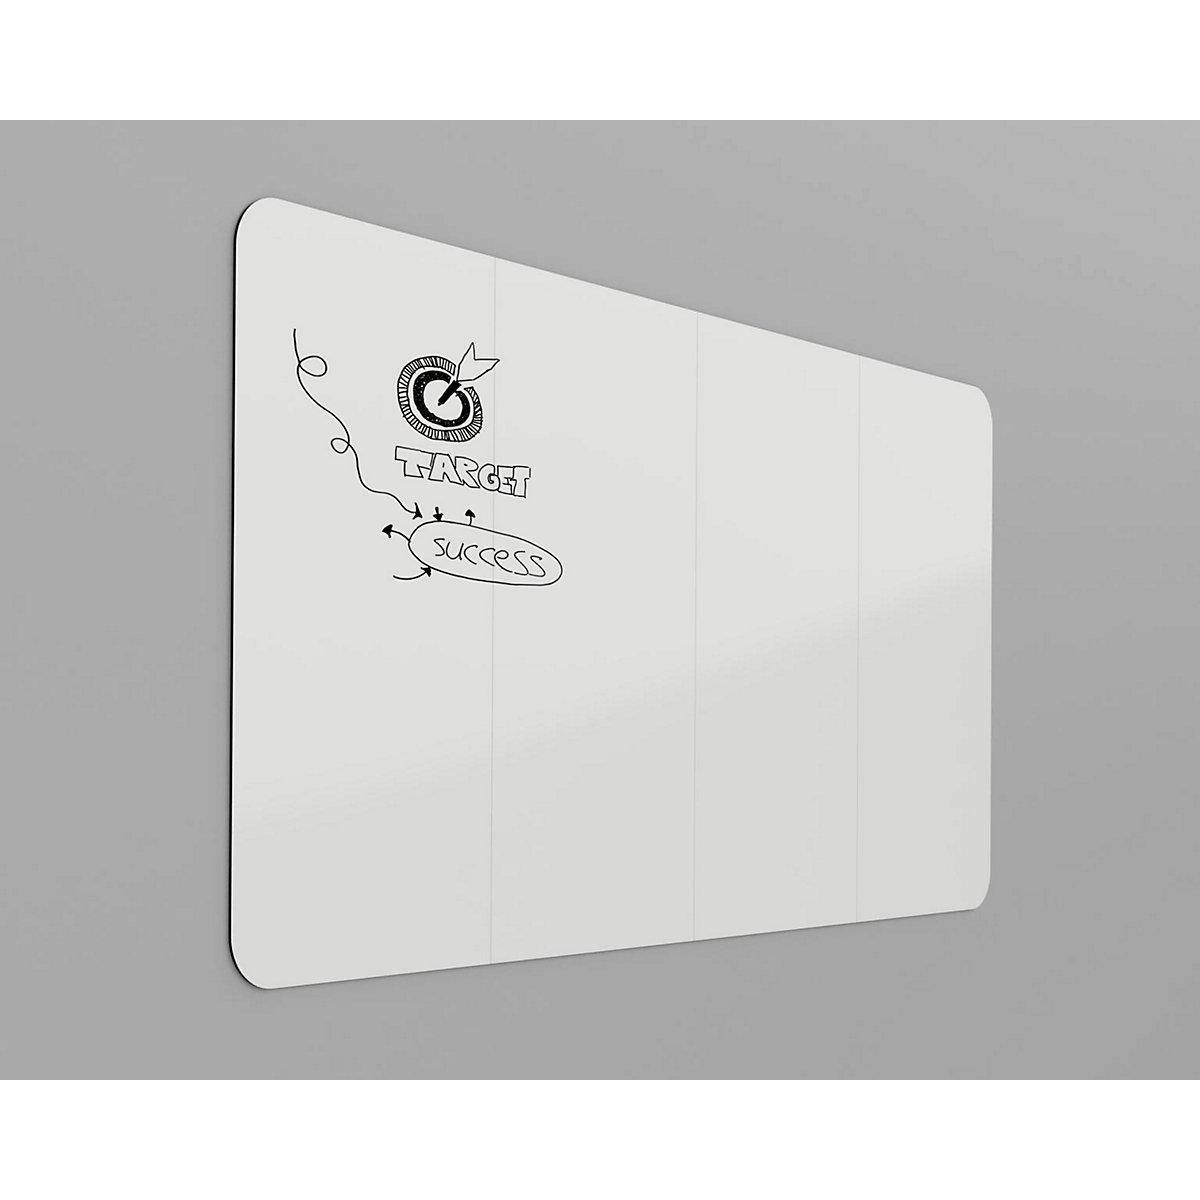 Design-XXL-whiteboard VisuWall – Chameleon (Productafbeelding 2)-1